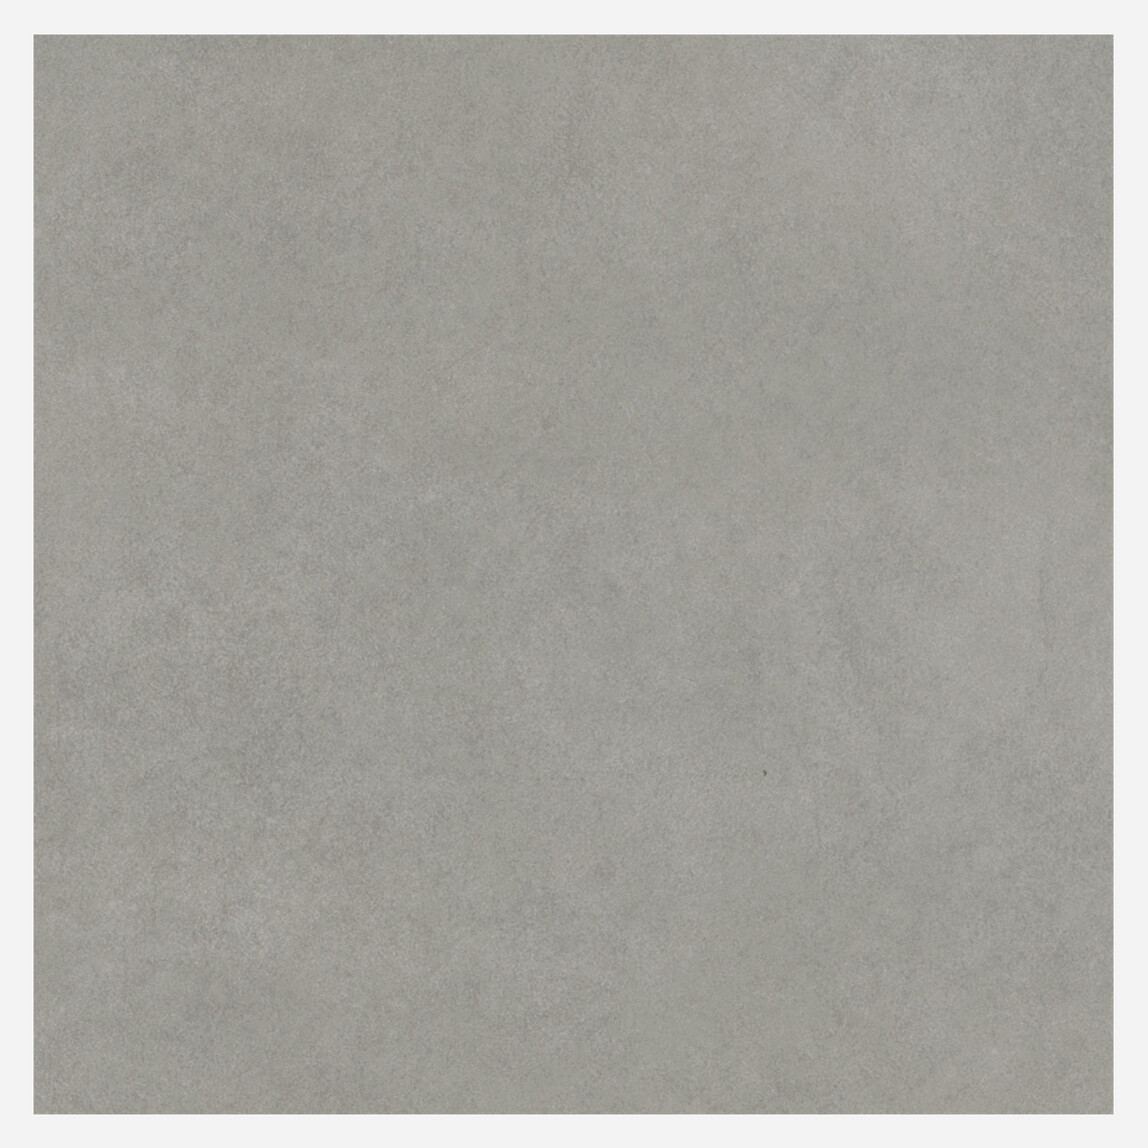    Kale Seramik Alesta Sırlı Granit Gri 60x60cm 